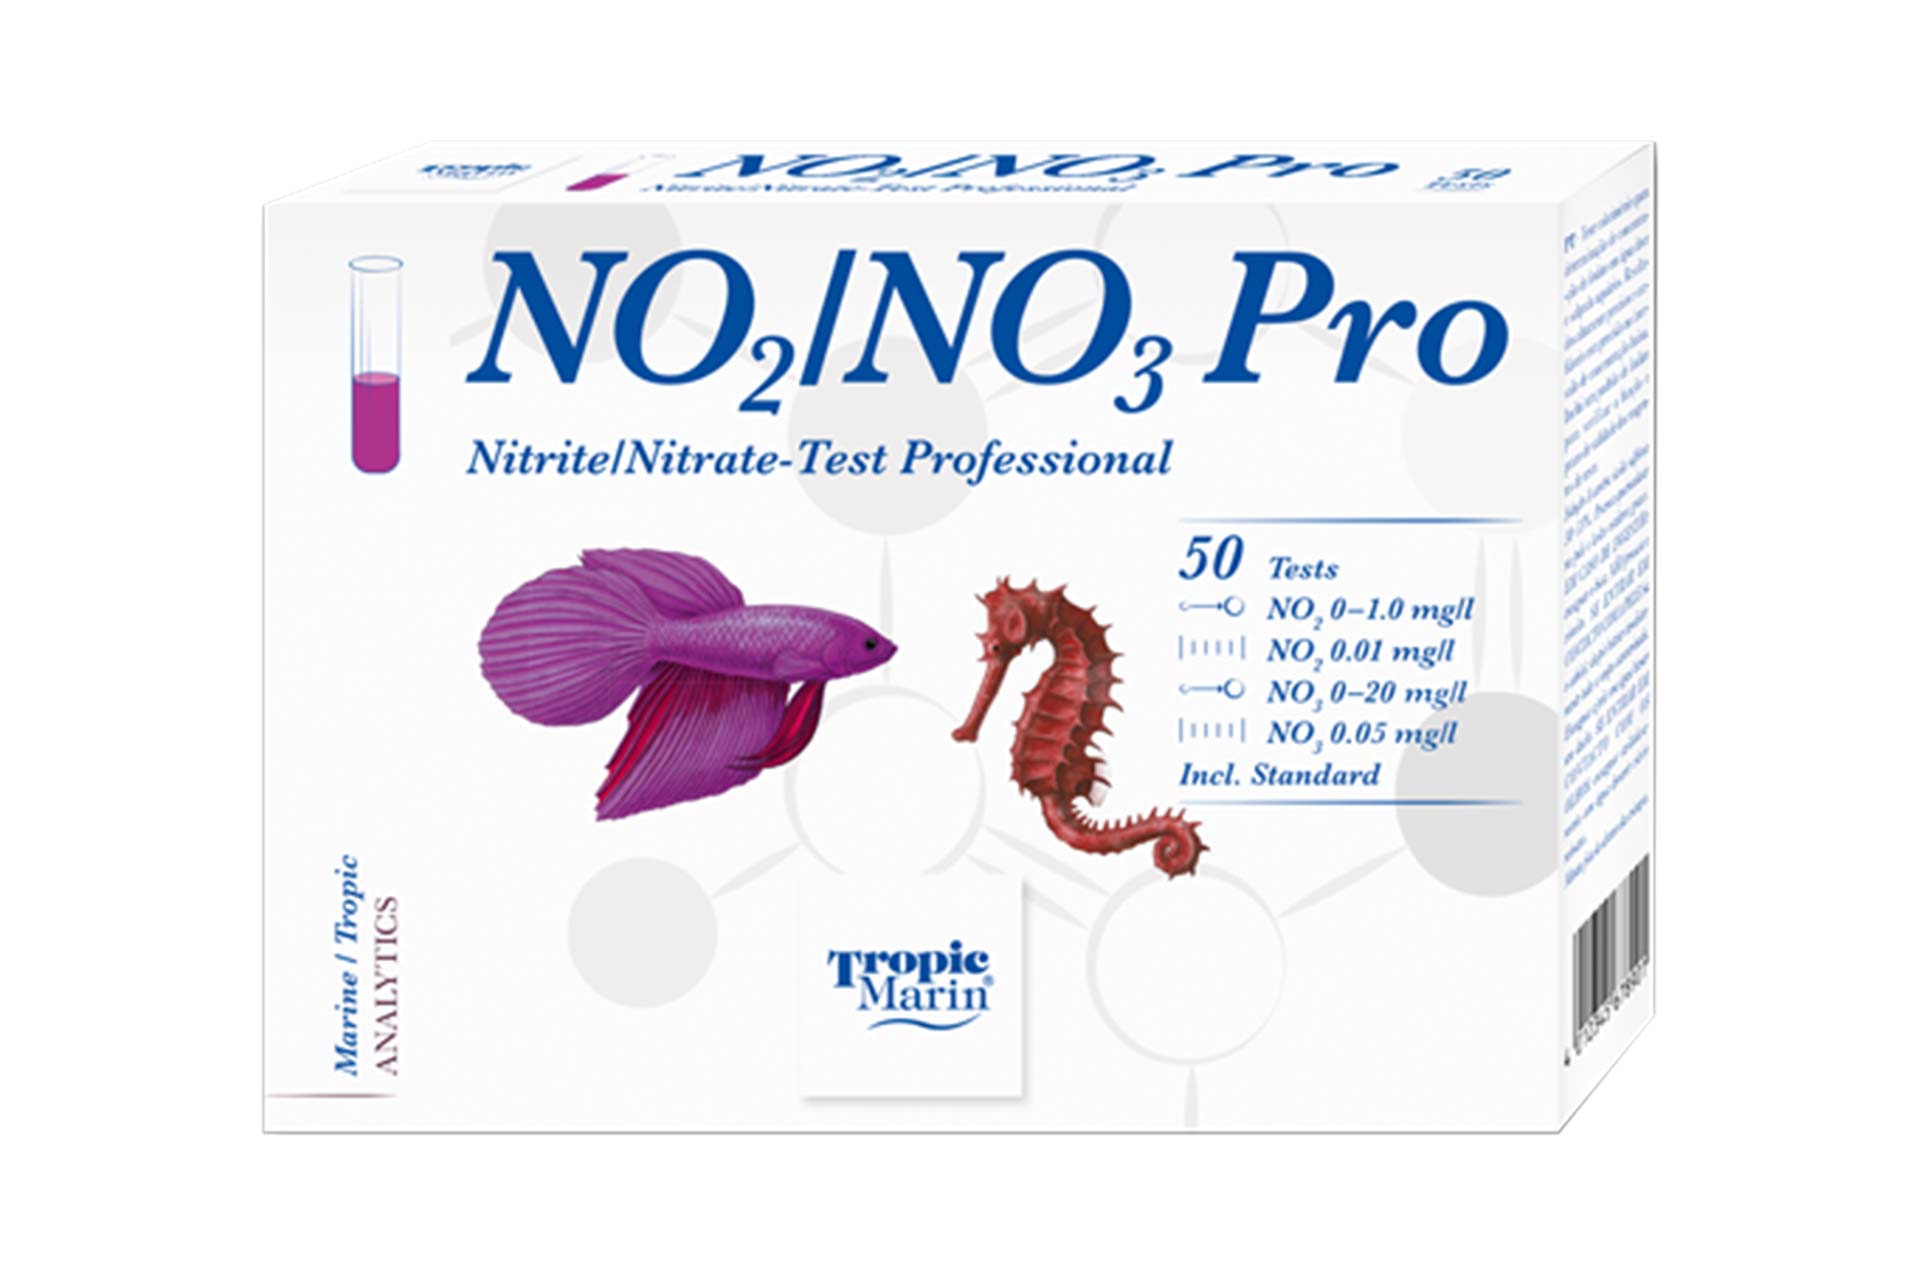 https://www.whitecorals.com/media/images/org/1NO2_NO3_Pro___Nitrit_Nitrat_Test_Professional.jpg